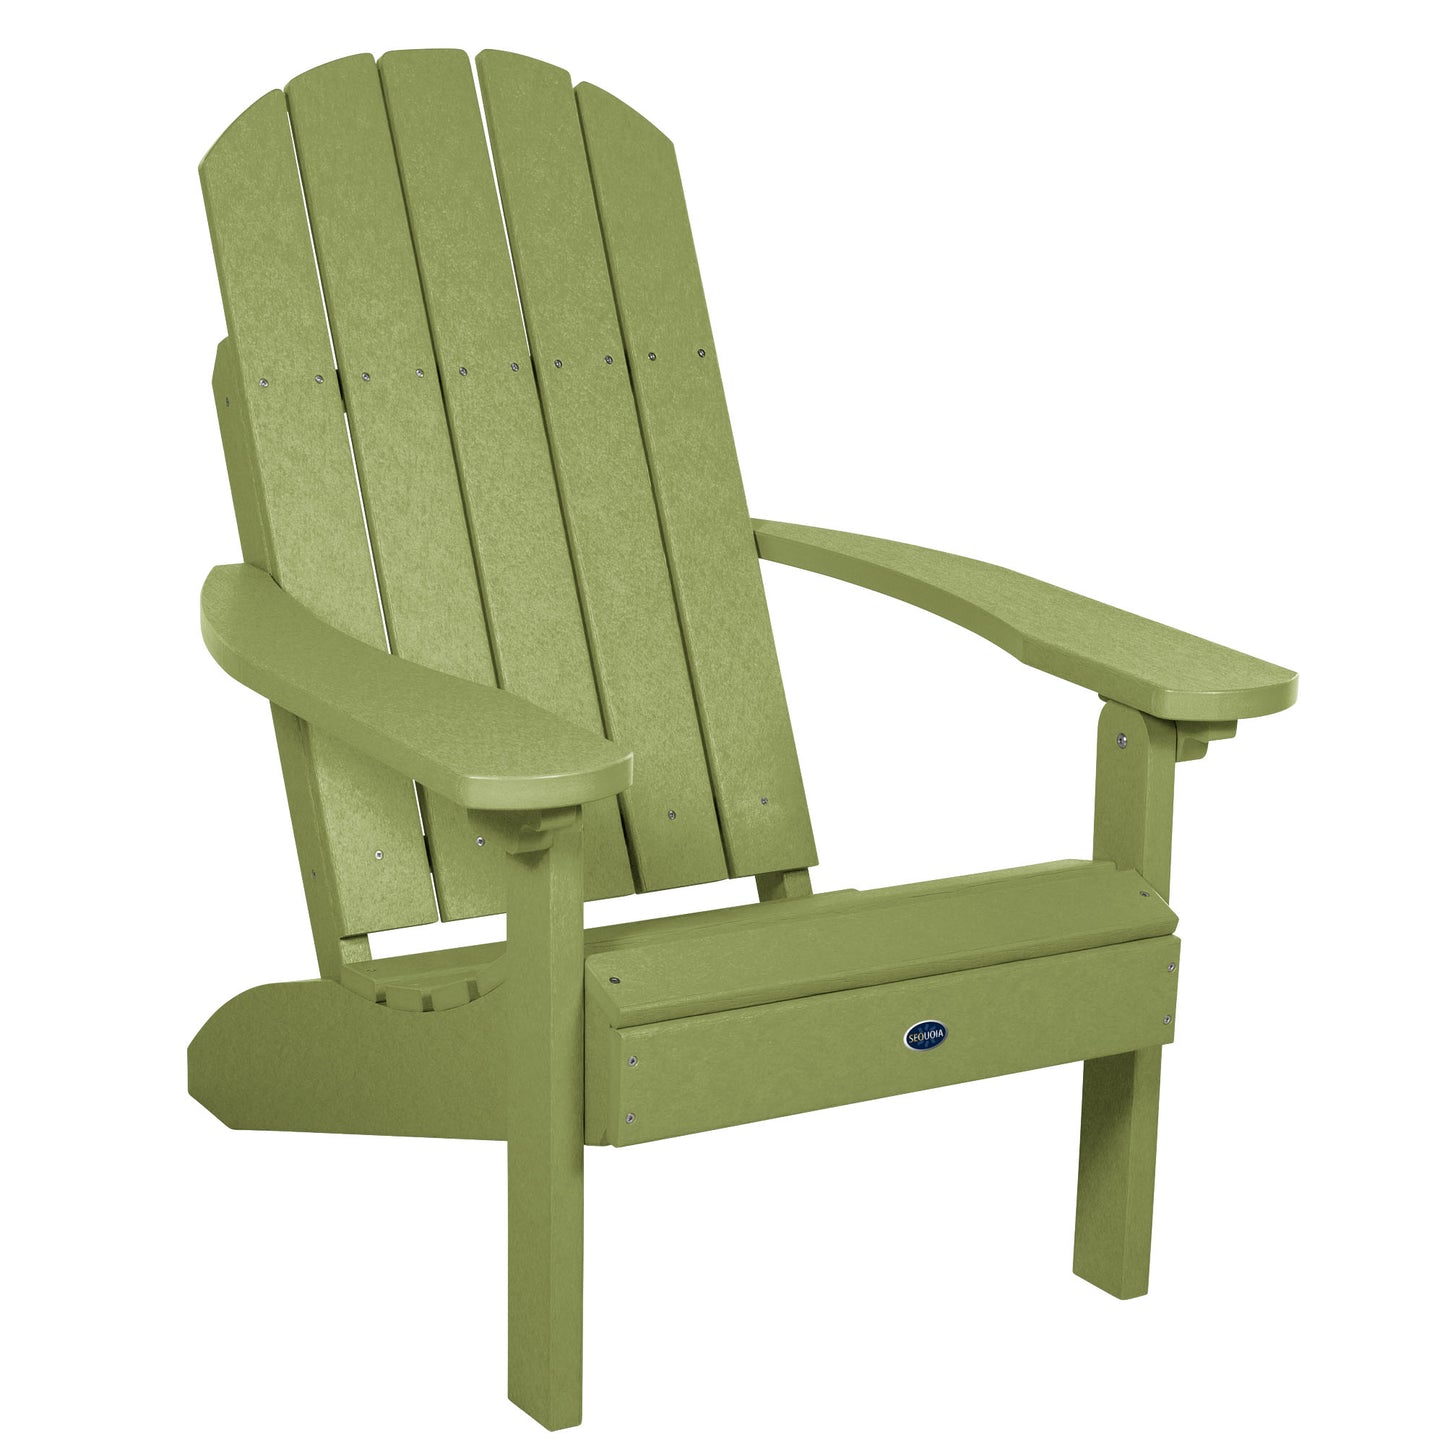 Sunrise Coast classic Adirondack chair in Palm Green